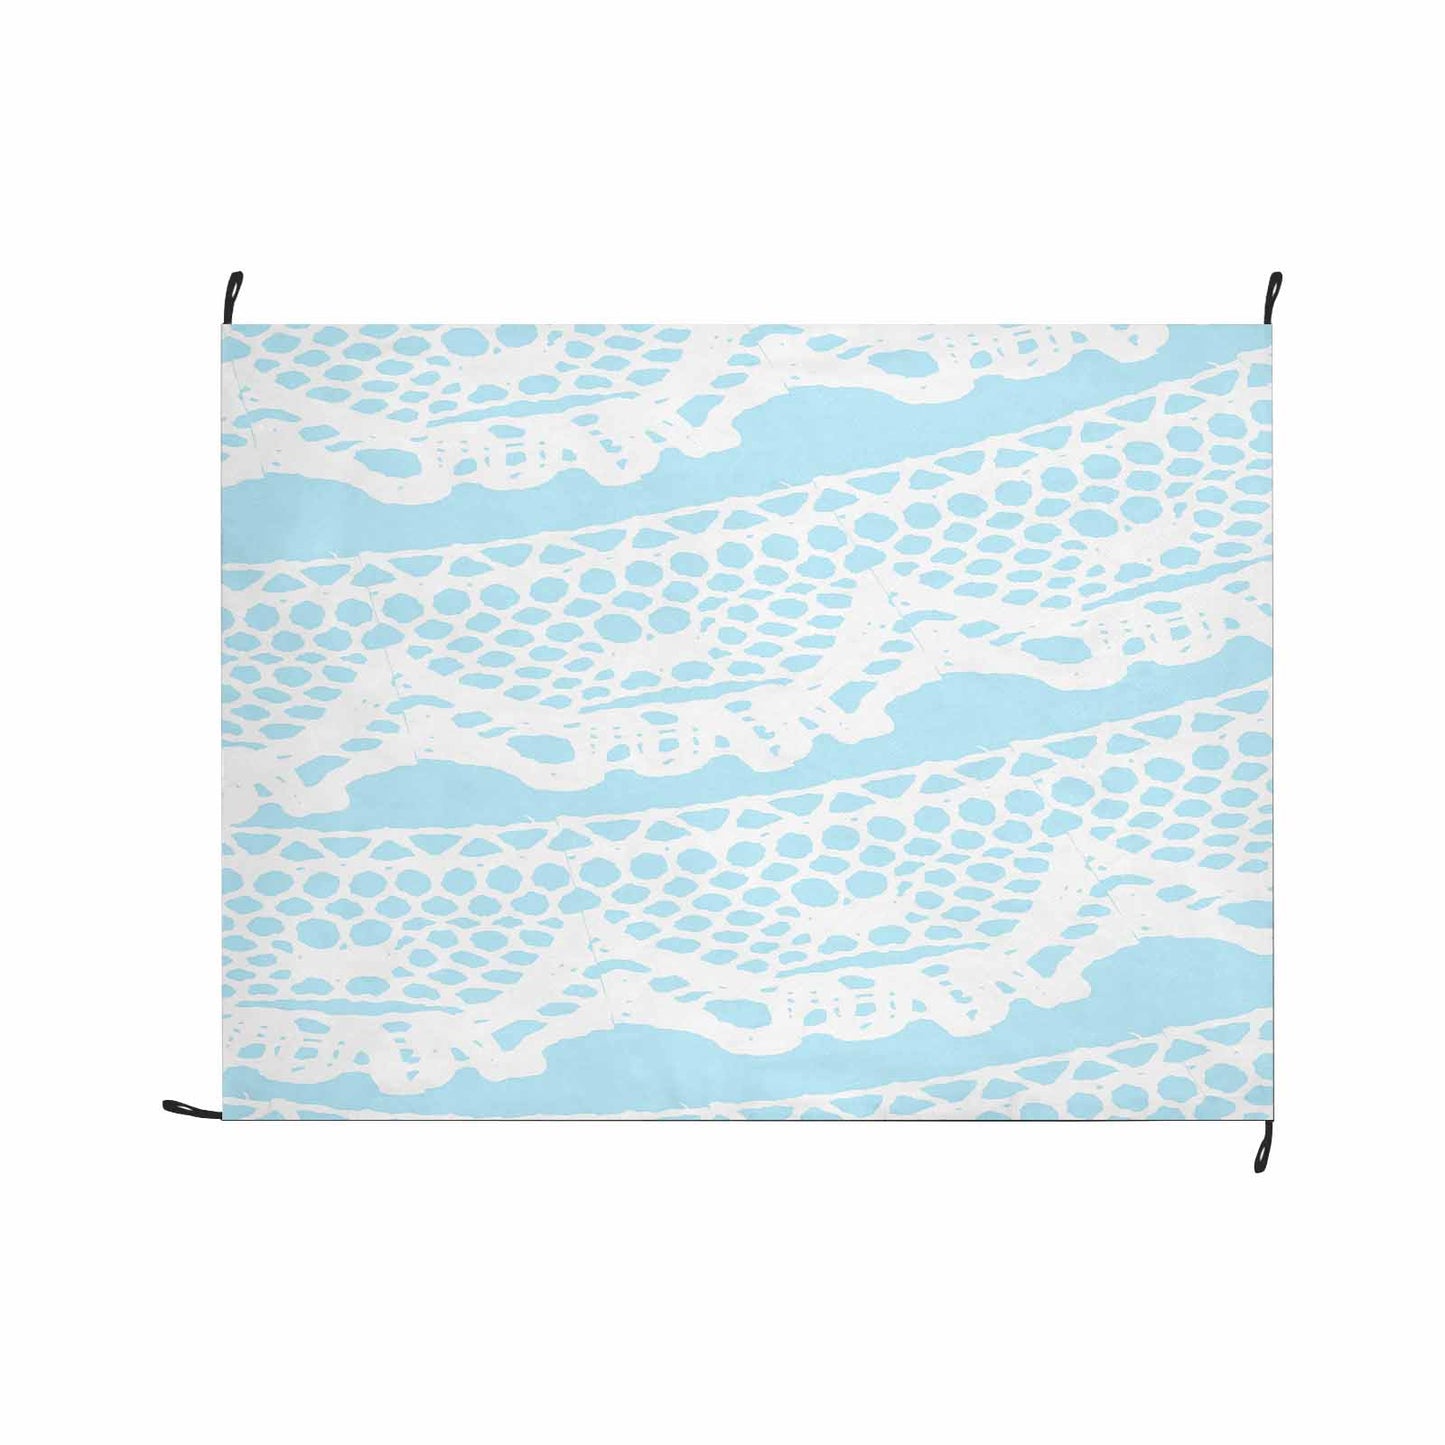 Victorian lace print waterproof picnic mat, 69 x 55in, design 08